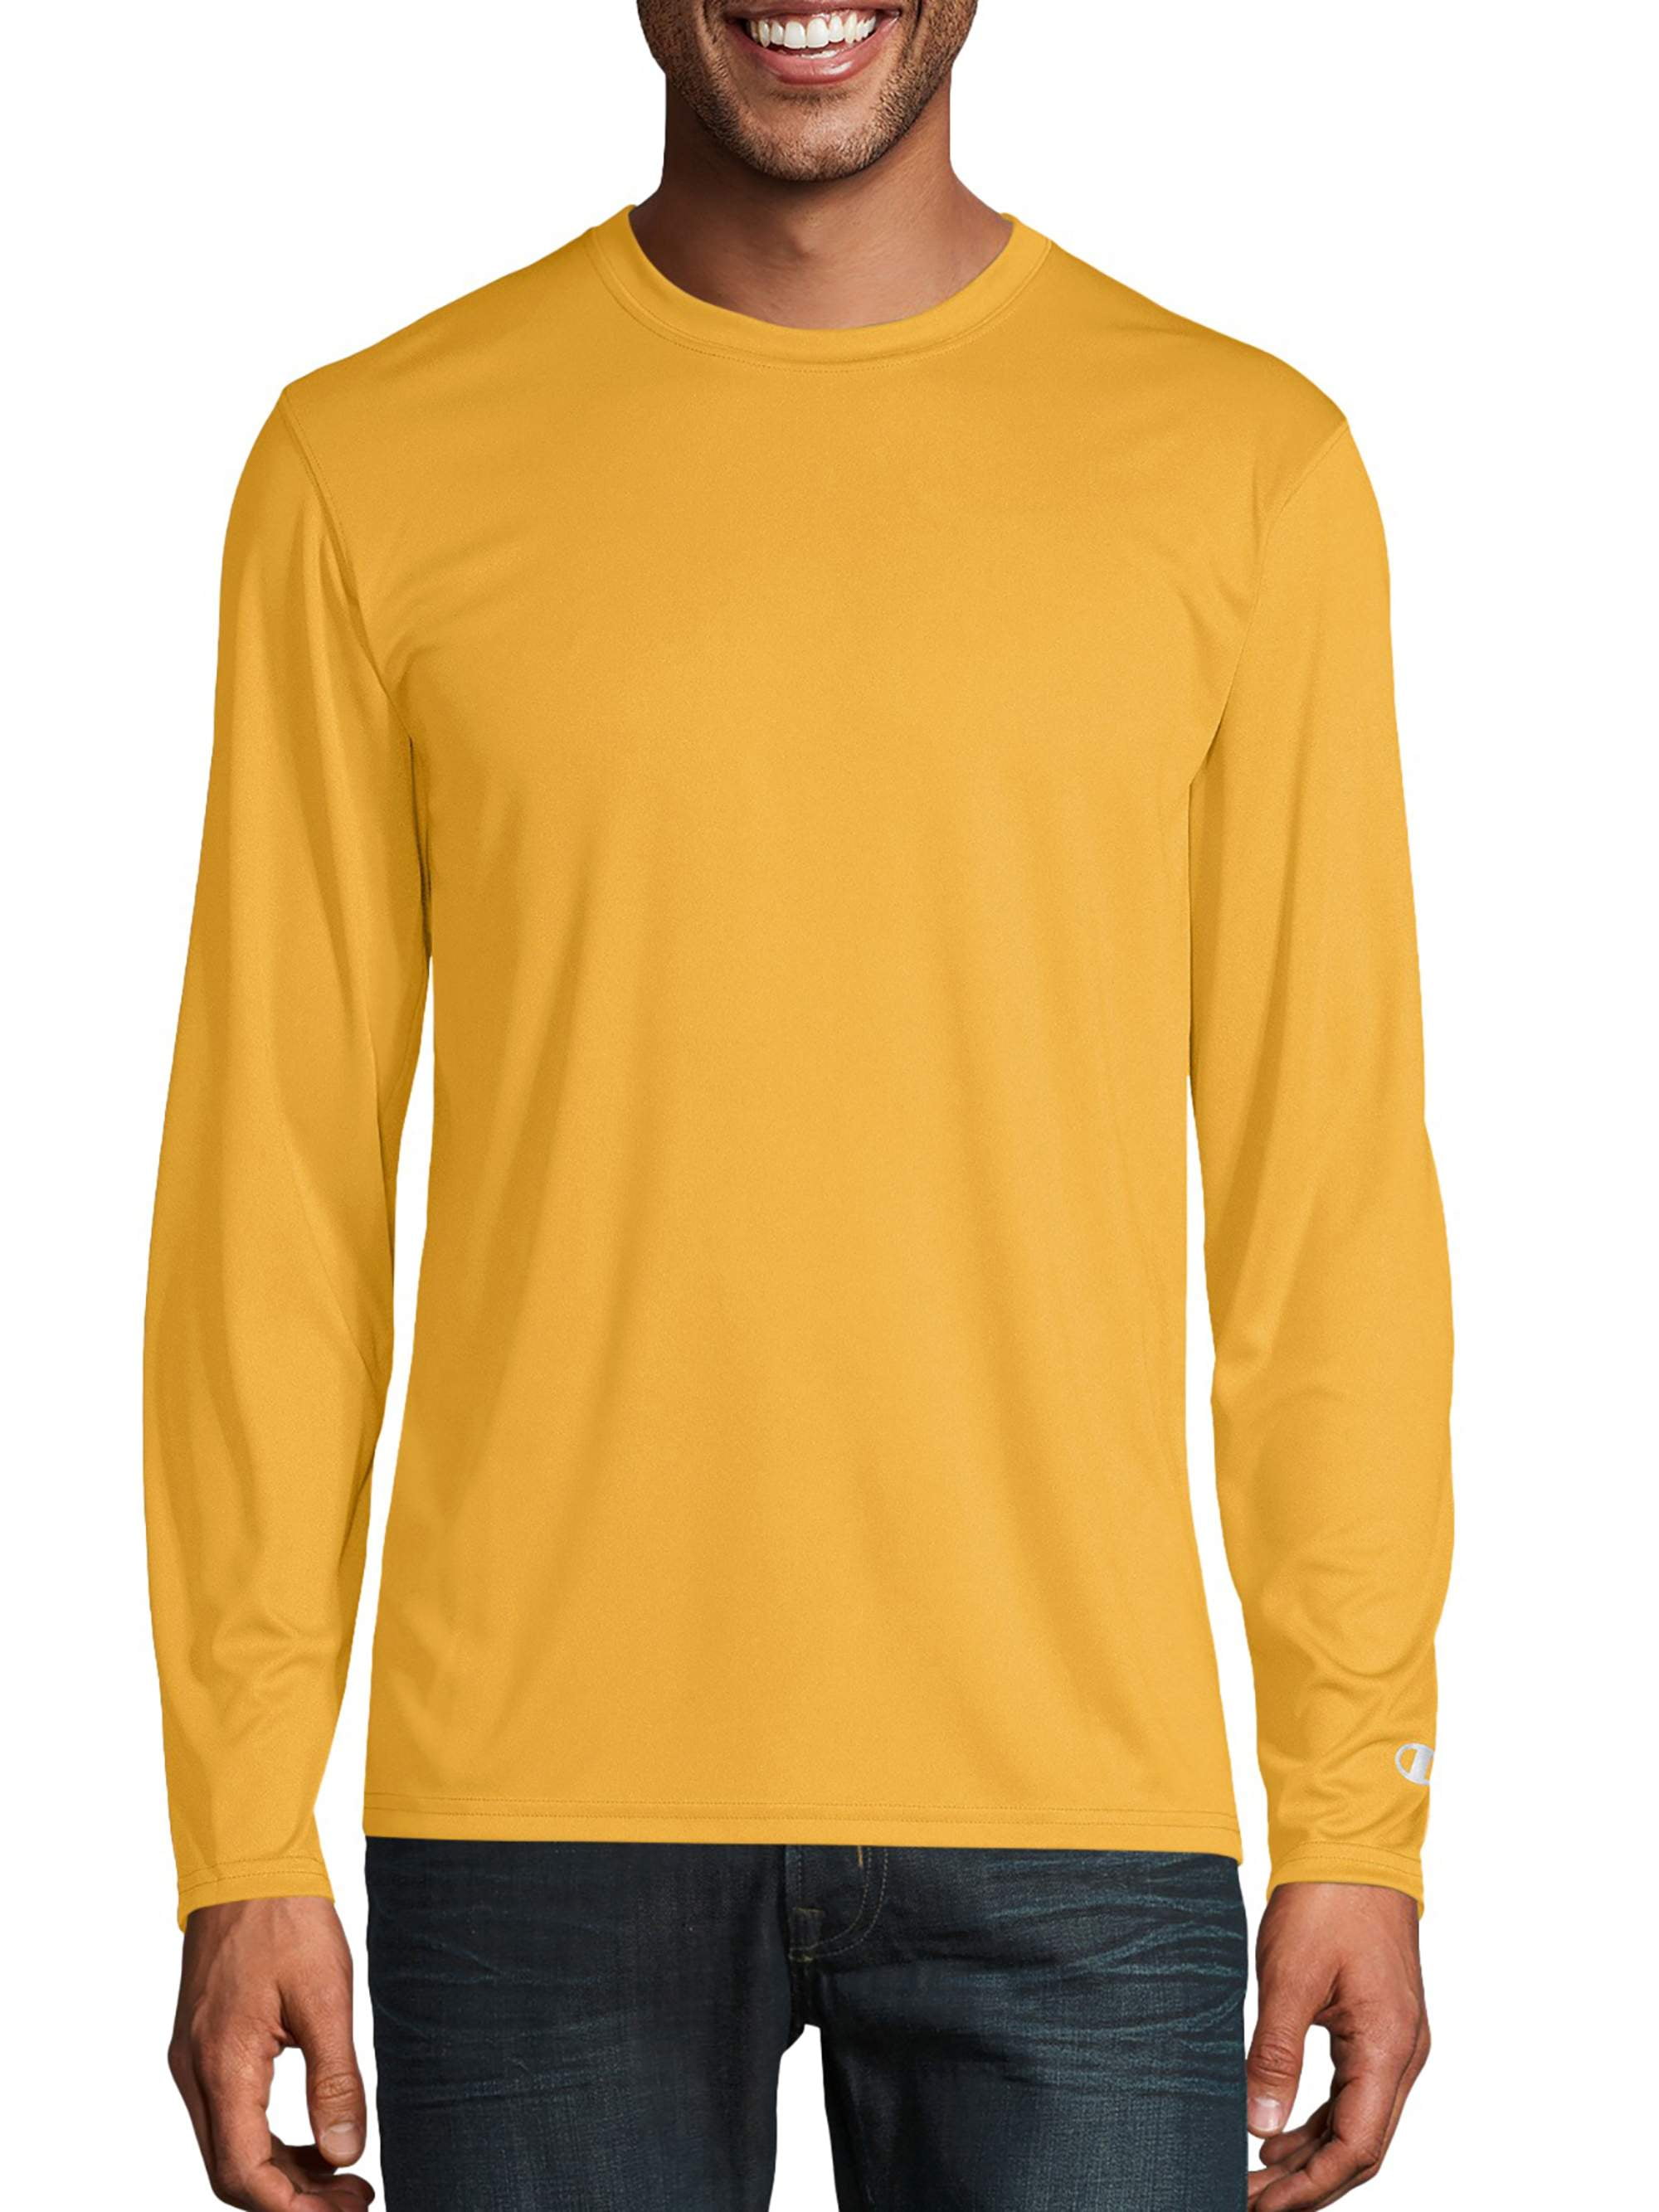 yellow champion long sleeve shirt